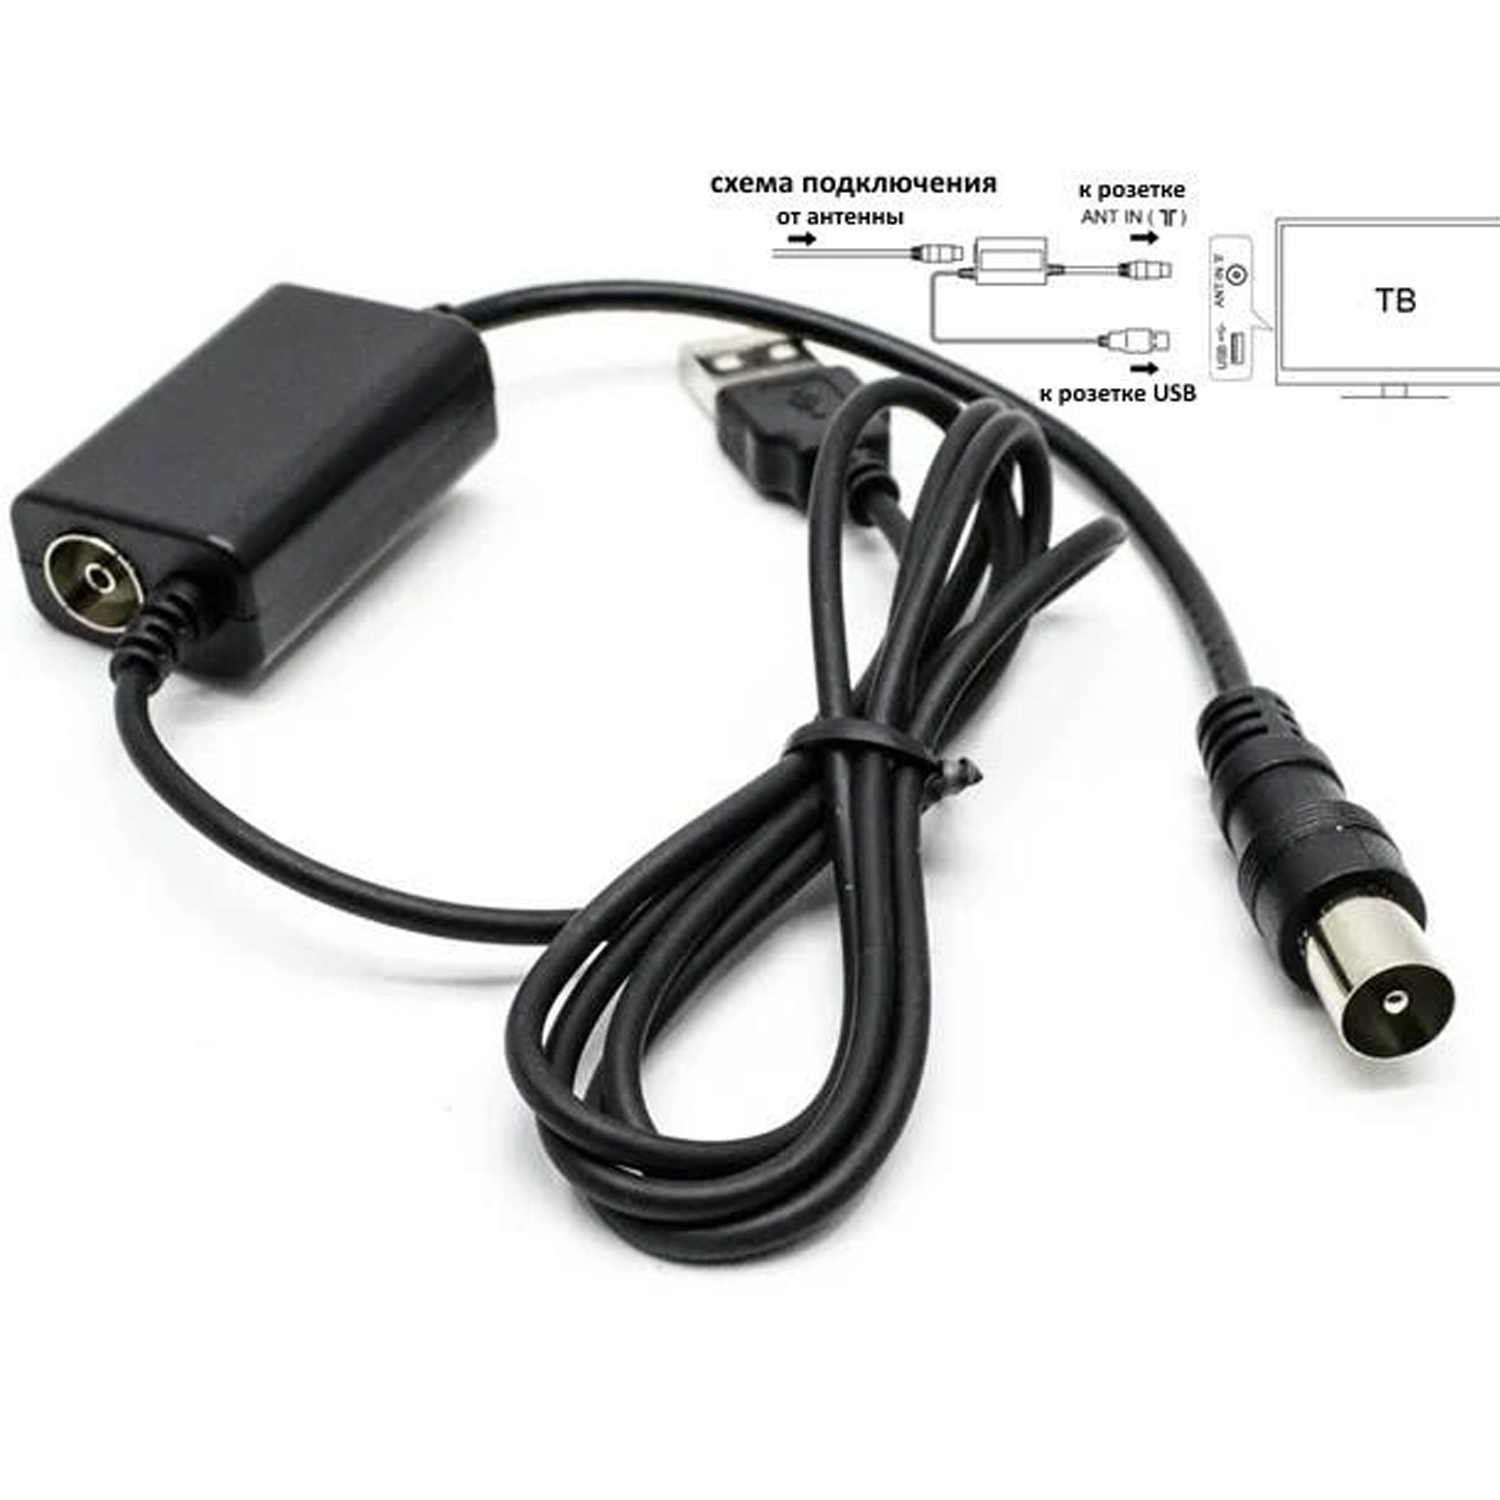 Инжектор питания USB-5V, фото